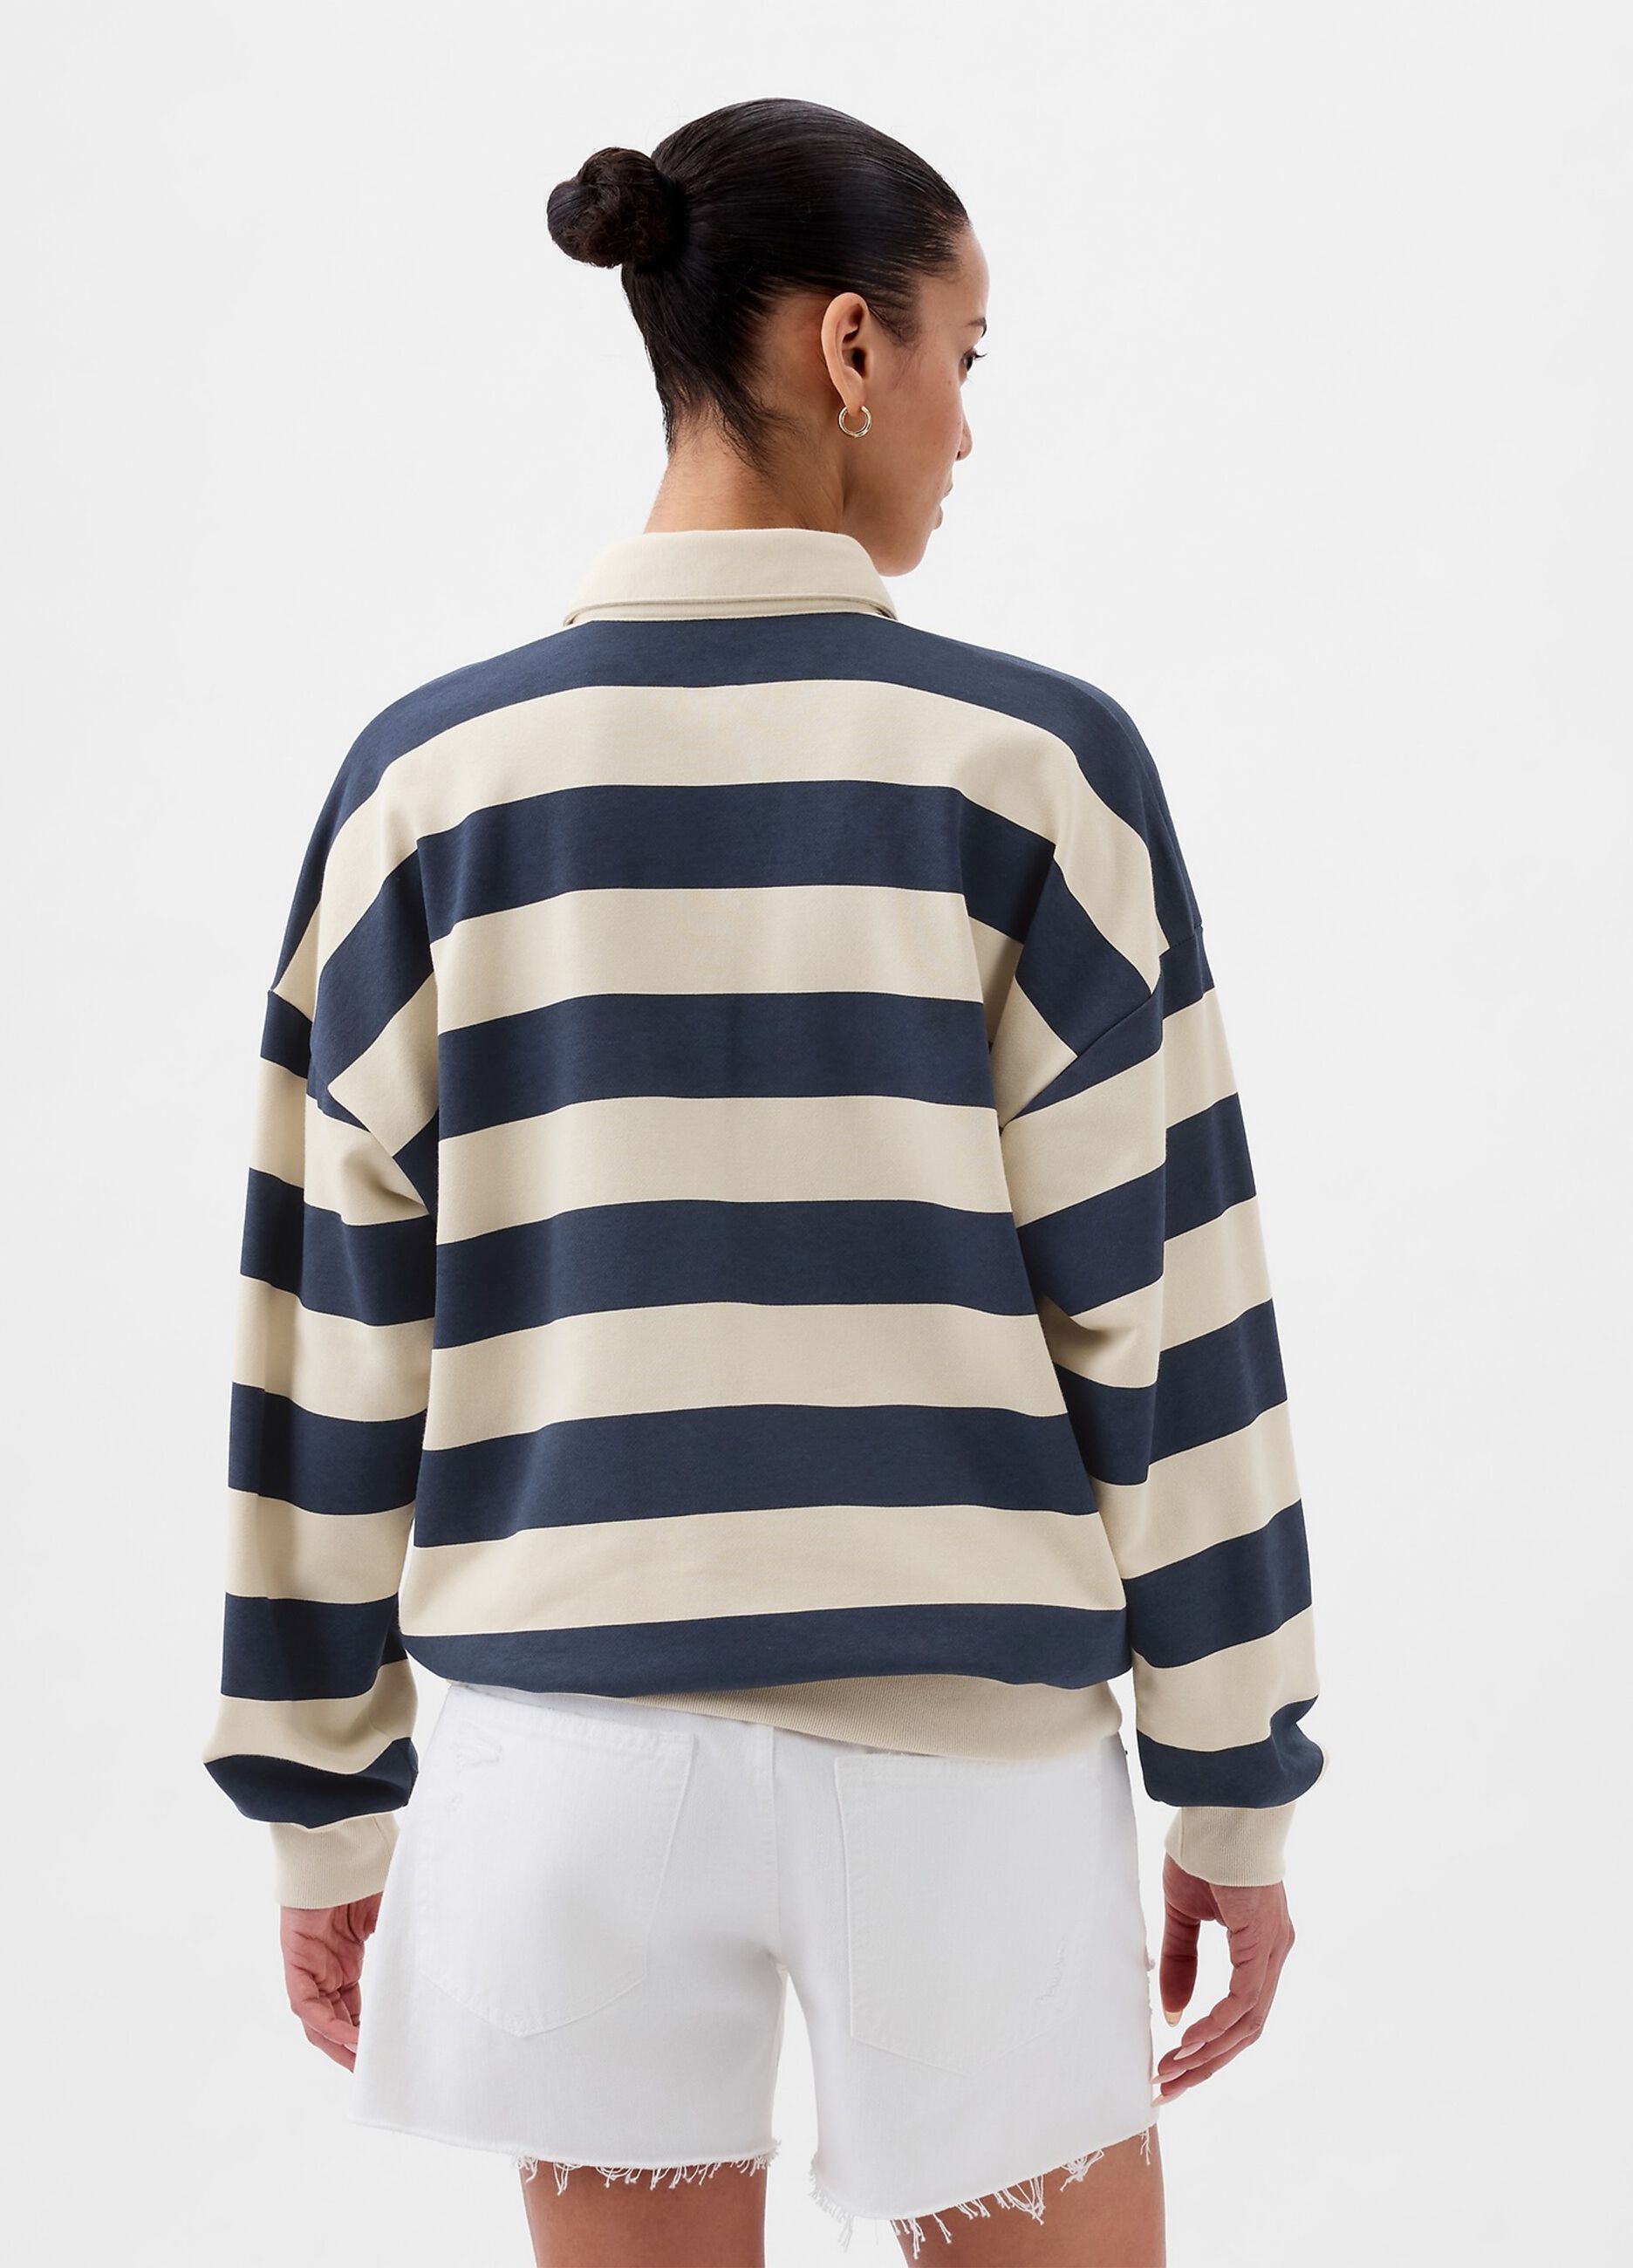 Striped oversized sweatshirt with polo neck